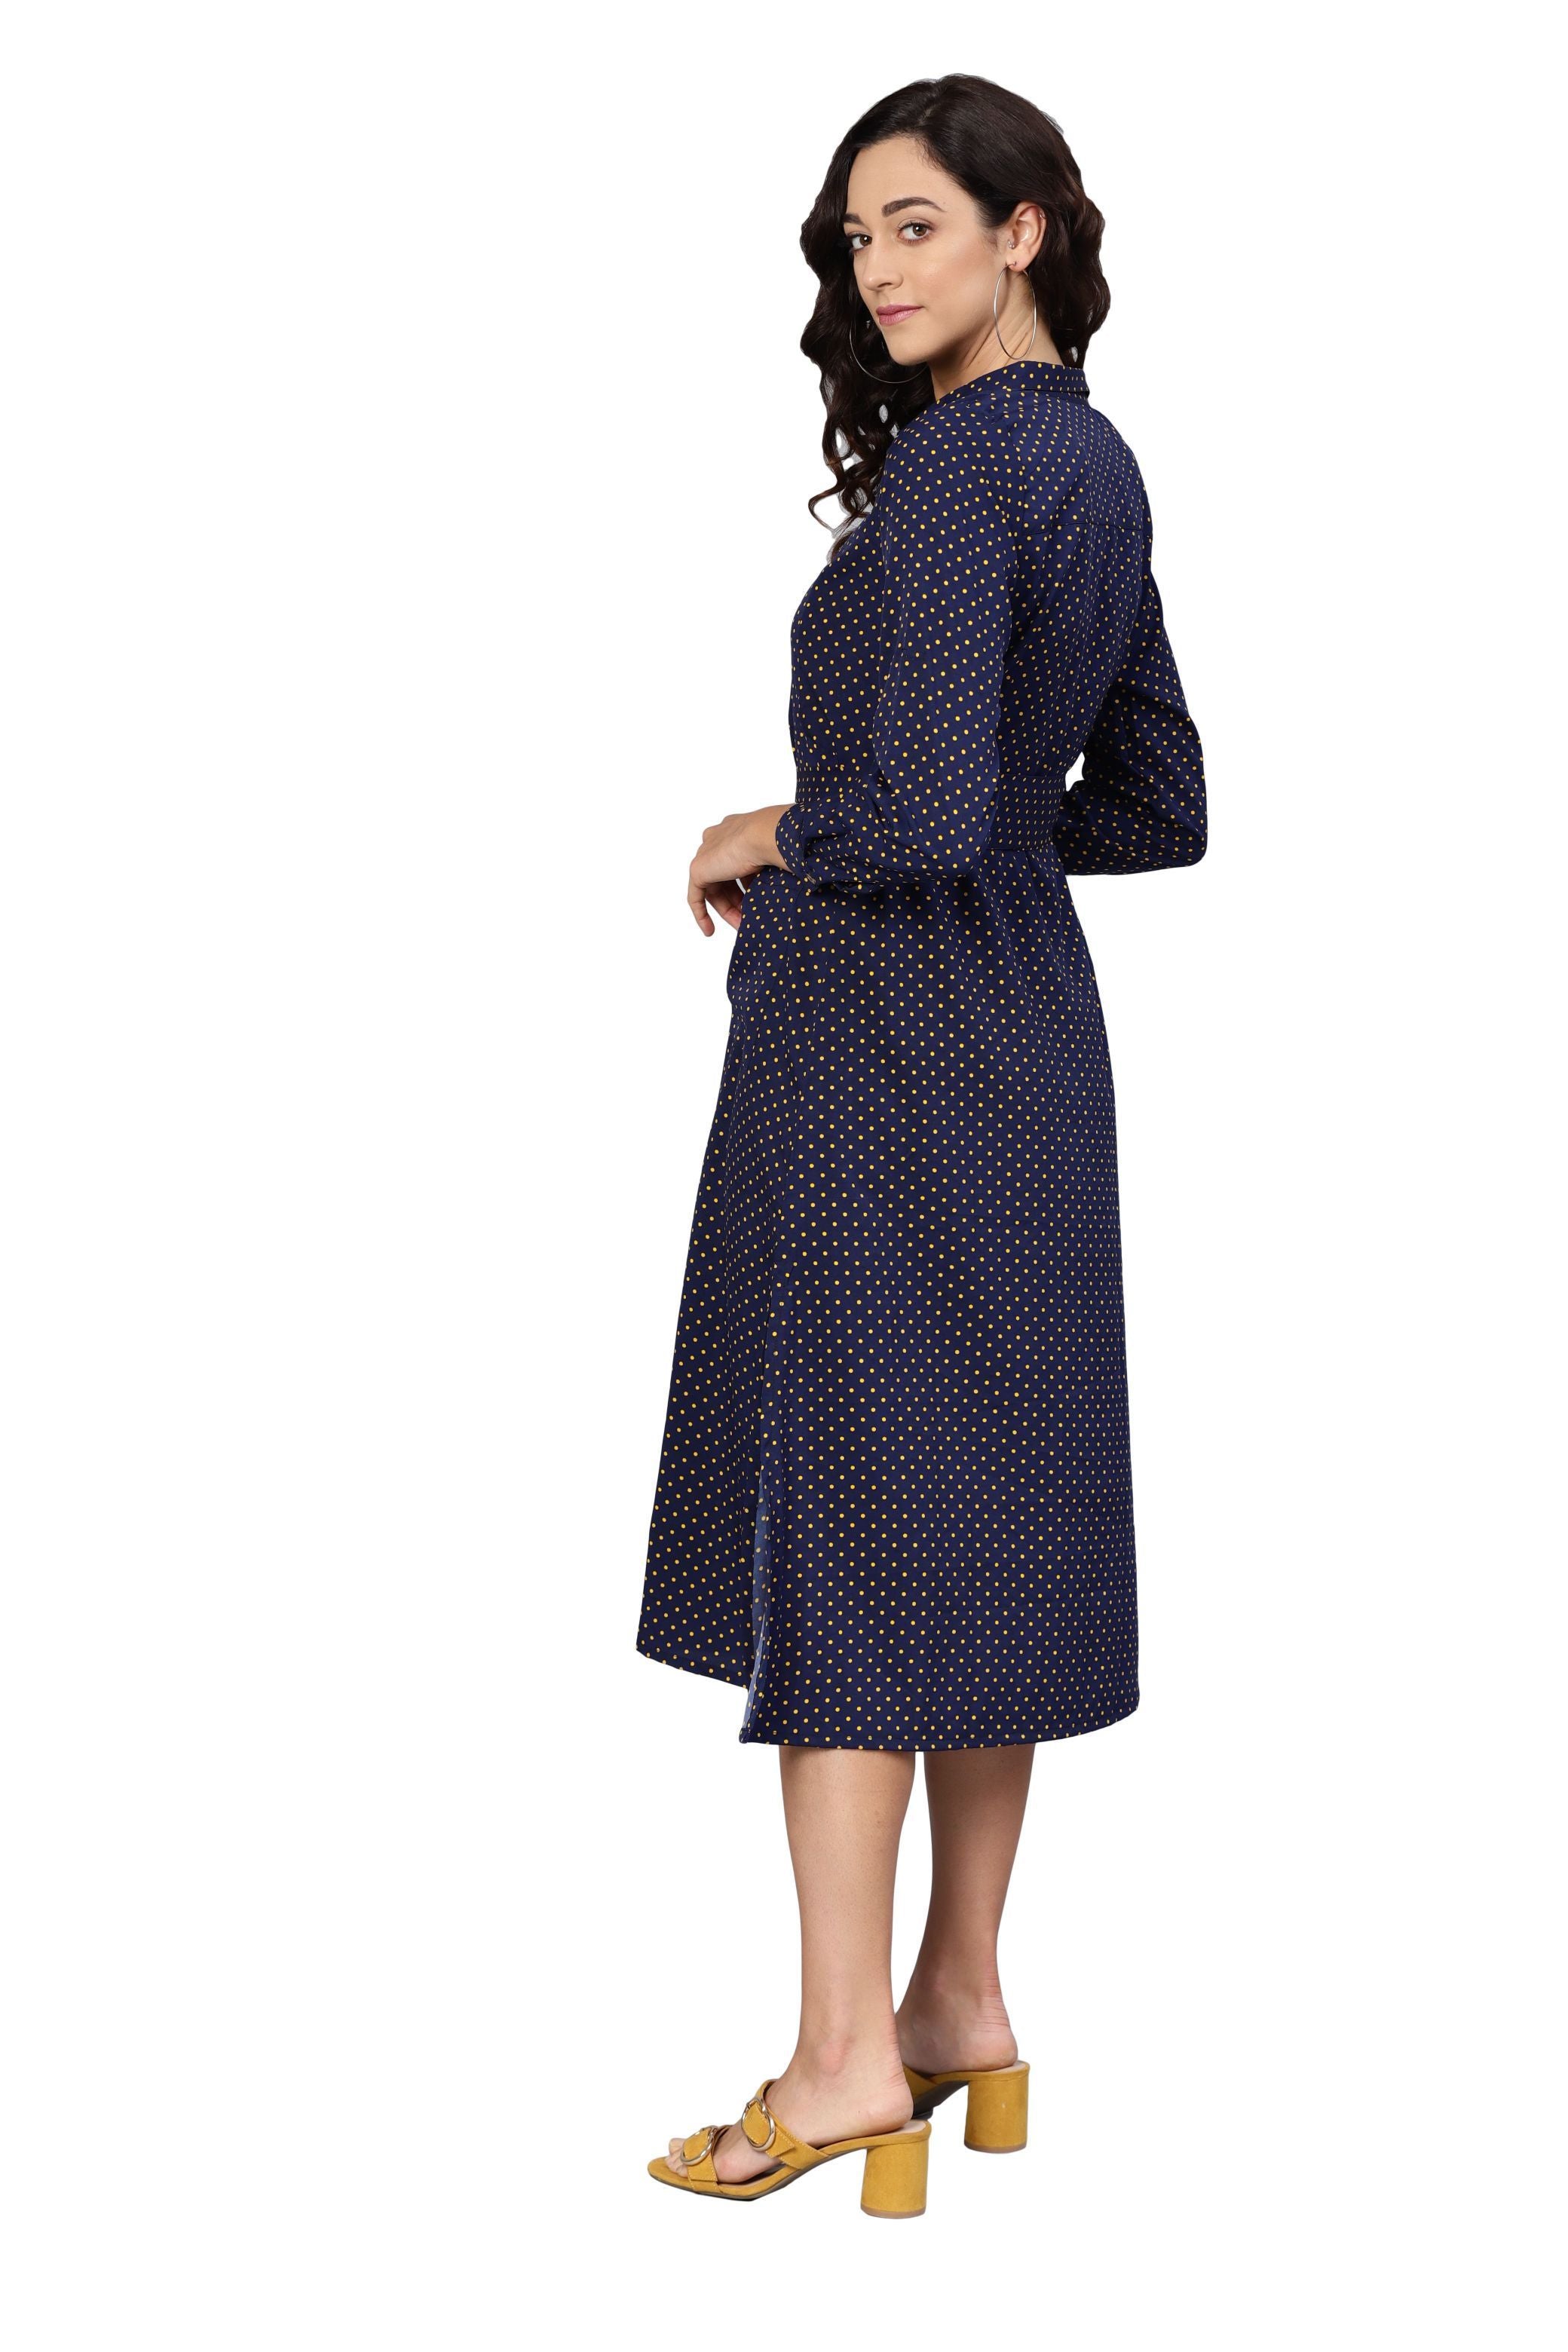 Women's Navy Blue Poly Crepe Solid 3/4 Sleeve Collar Neck Dress - Myshka